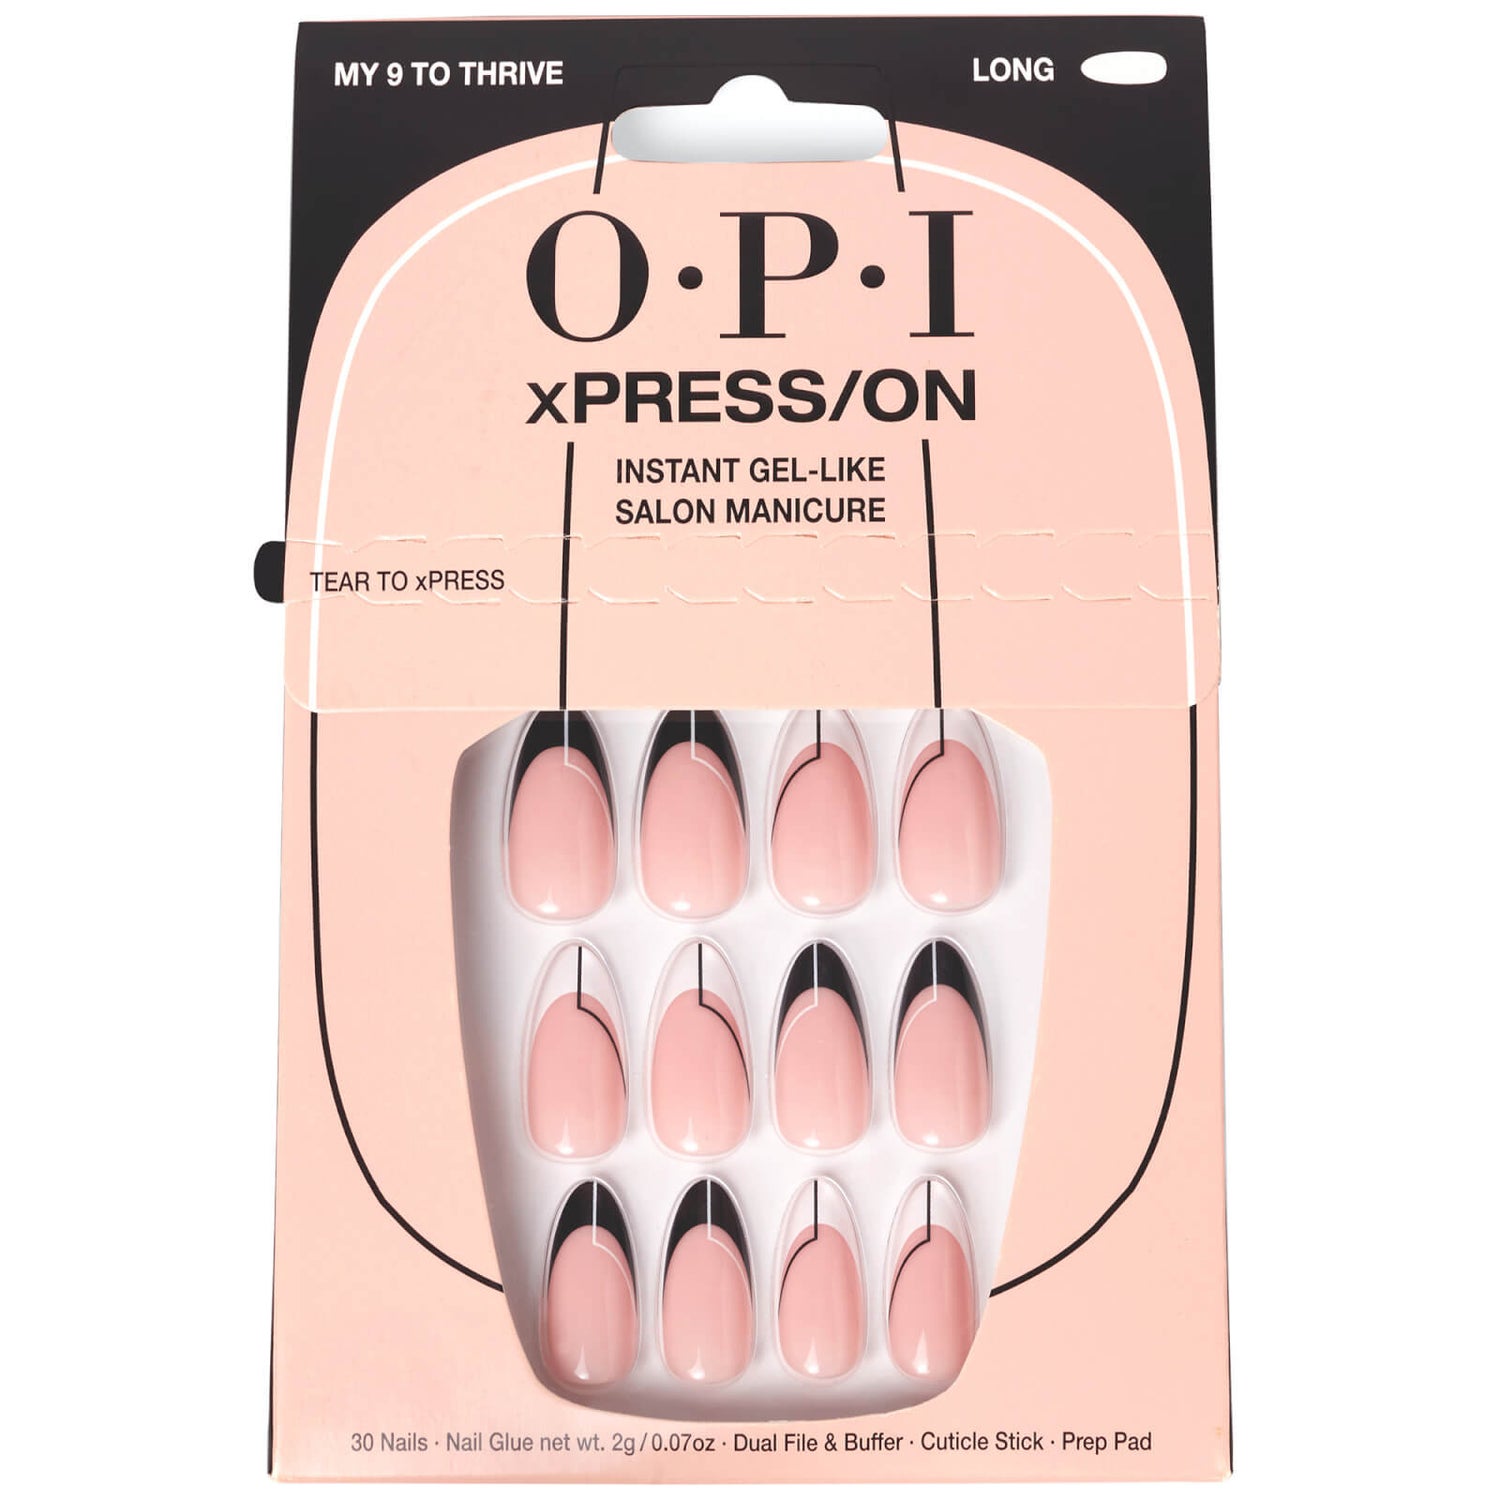 OPI xPRESS/ON - My 9 To Thrive Press On Nails Gel-Like Salon Manicure